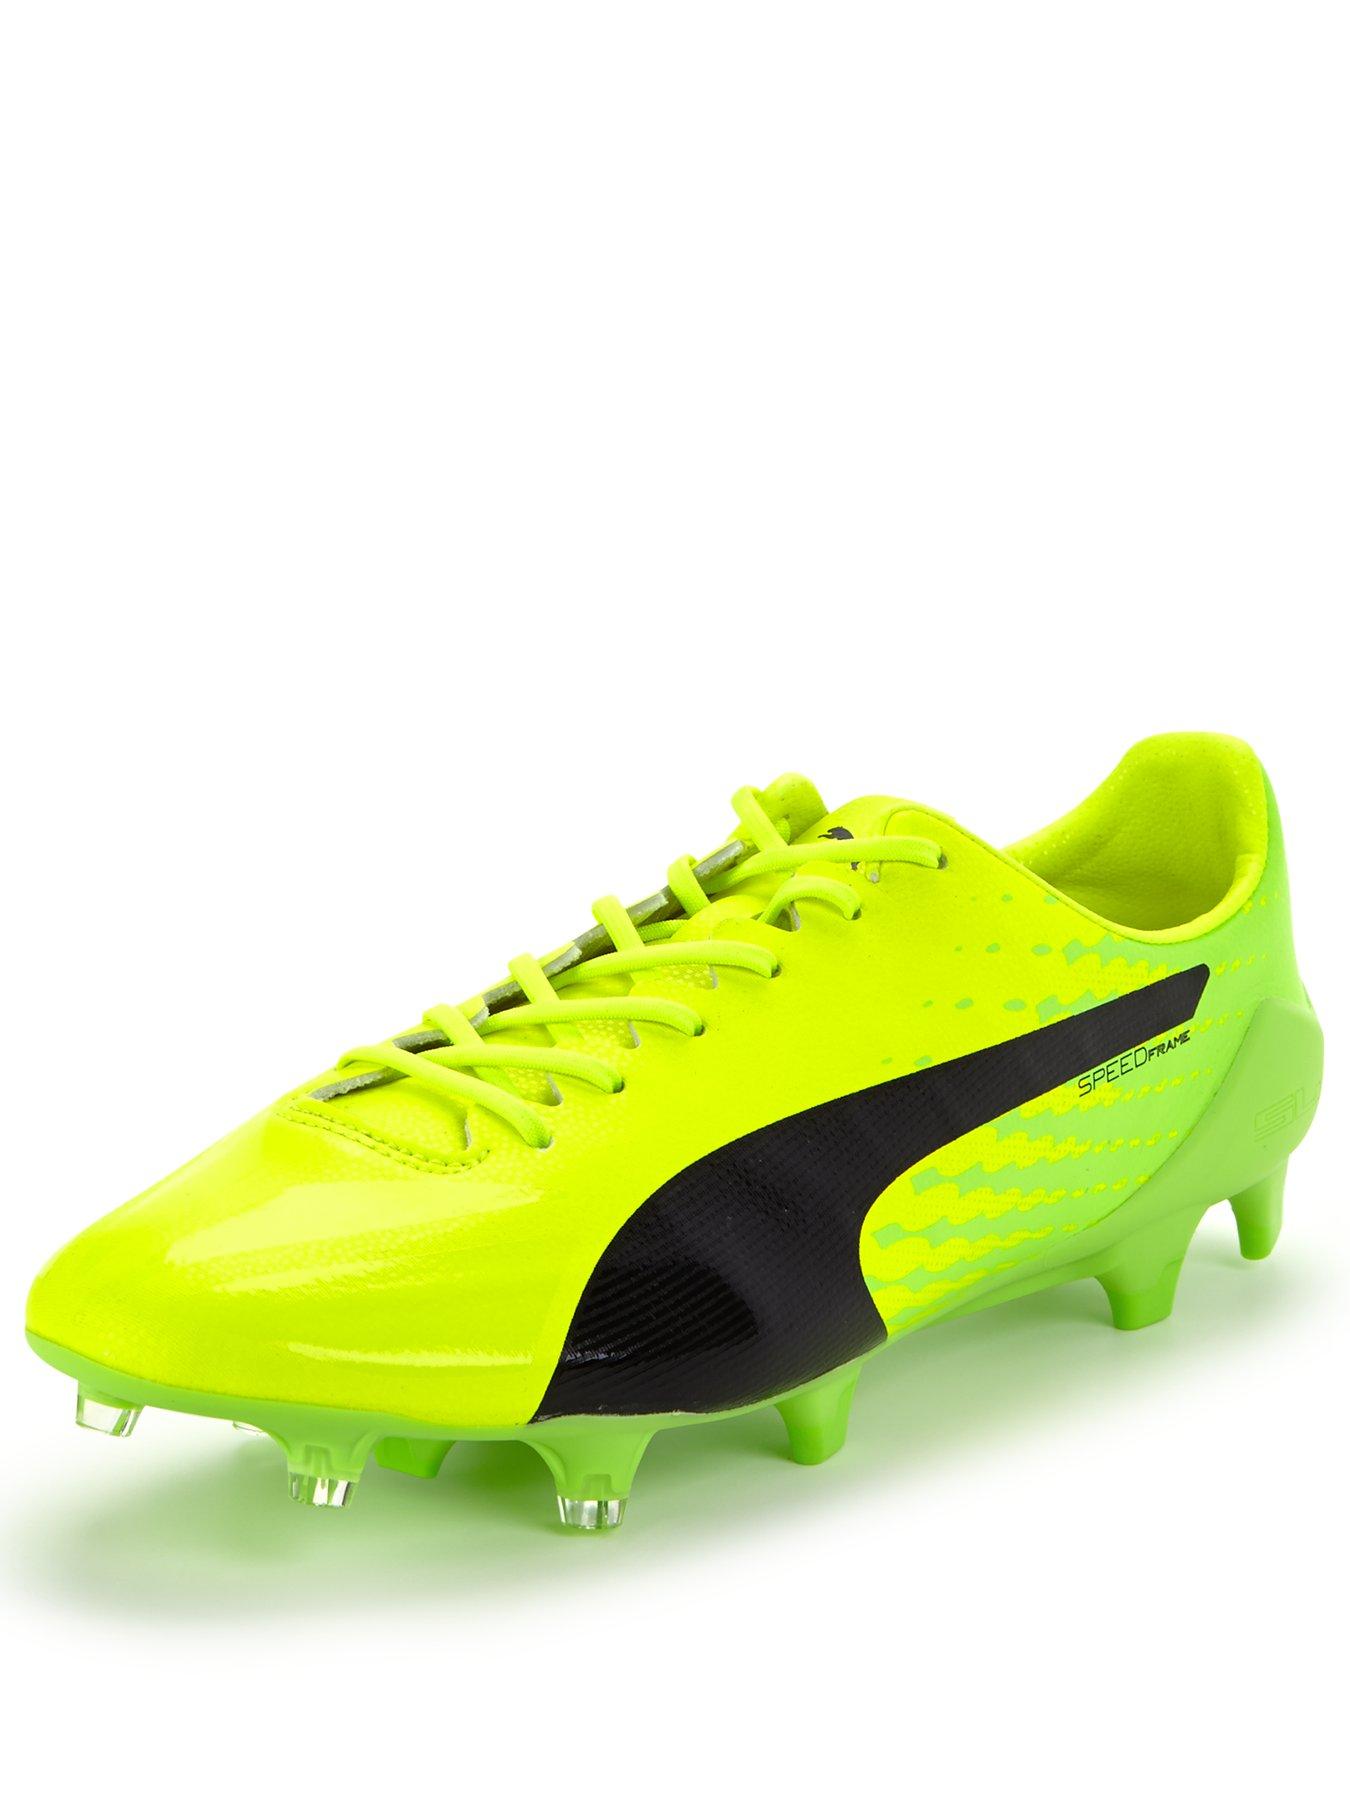 Puma evoSPEED 17.1 FG Football Boots Yellow | FOOTY.COM